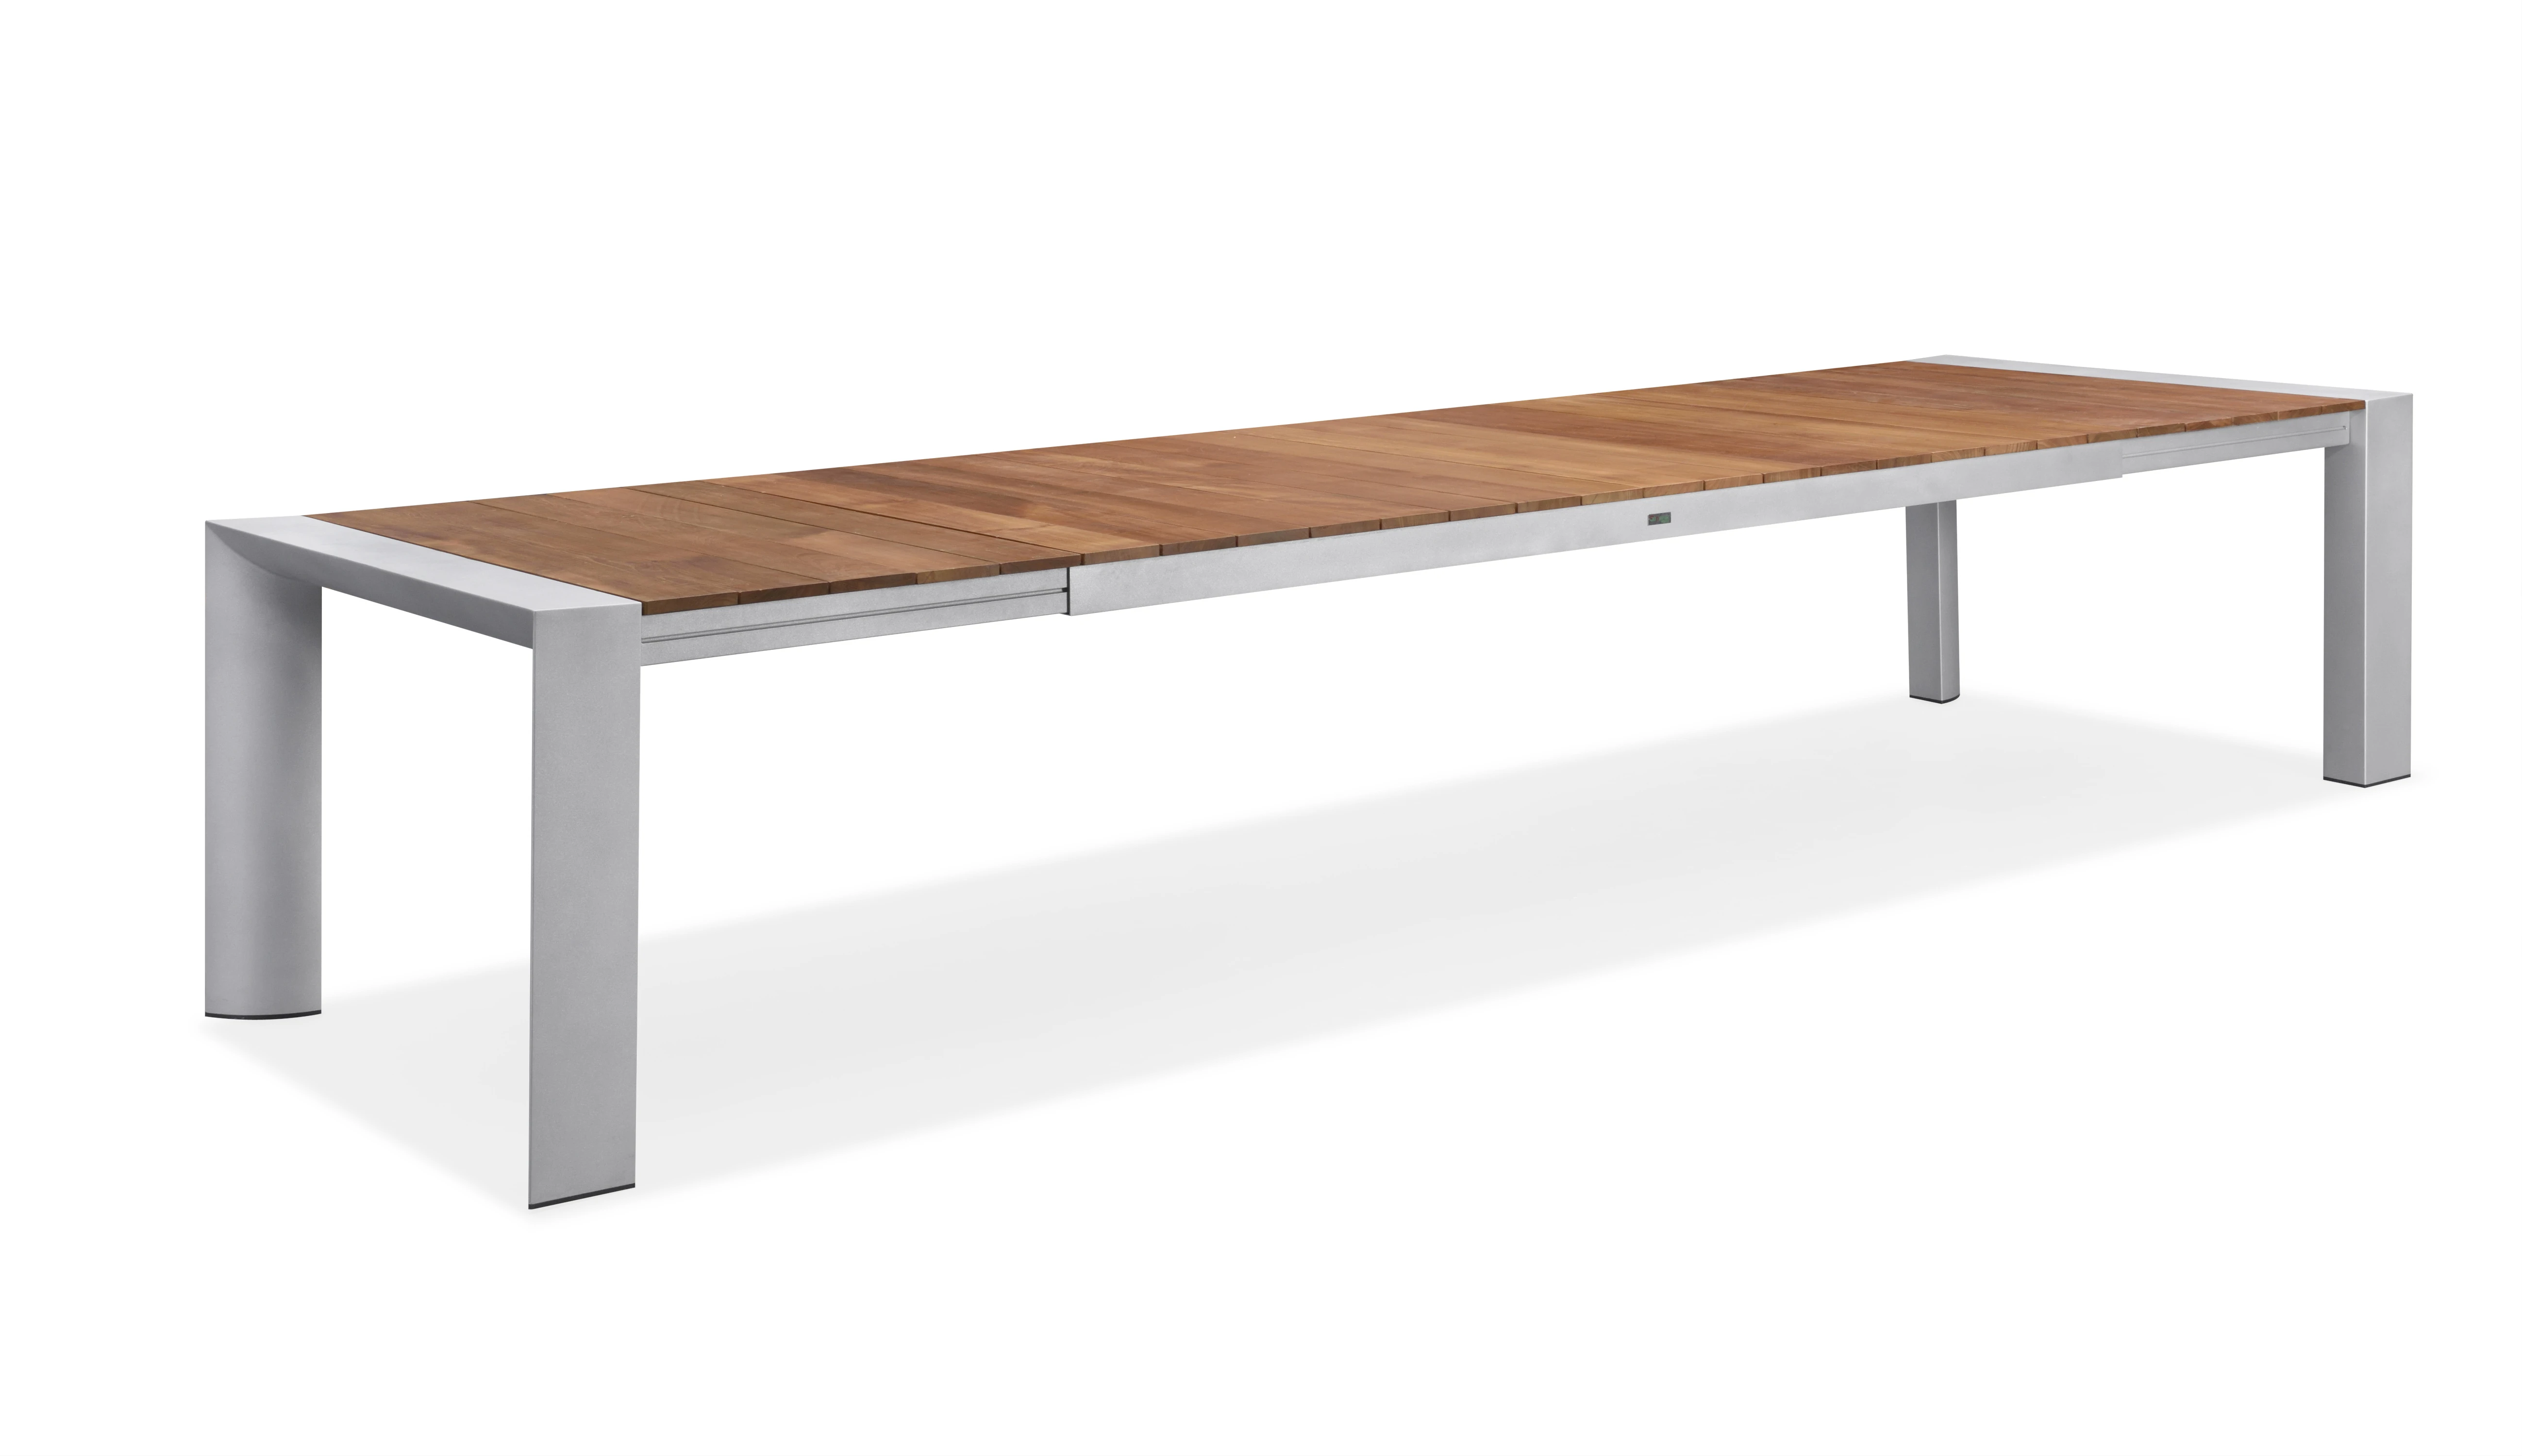 835TT5E2 Aluminum Outdoor Extension Table Teak wood Top Patio Table Aluminum Table Frame